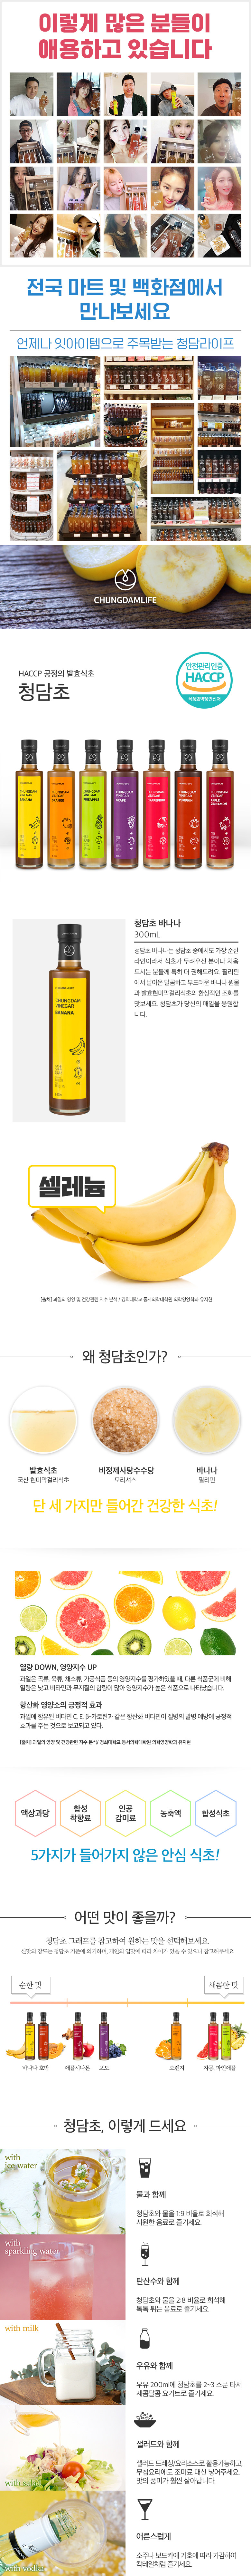 cho_banana300_D.jpg